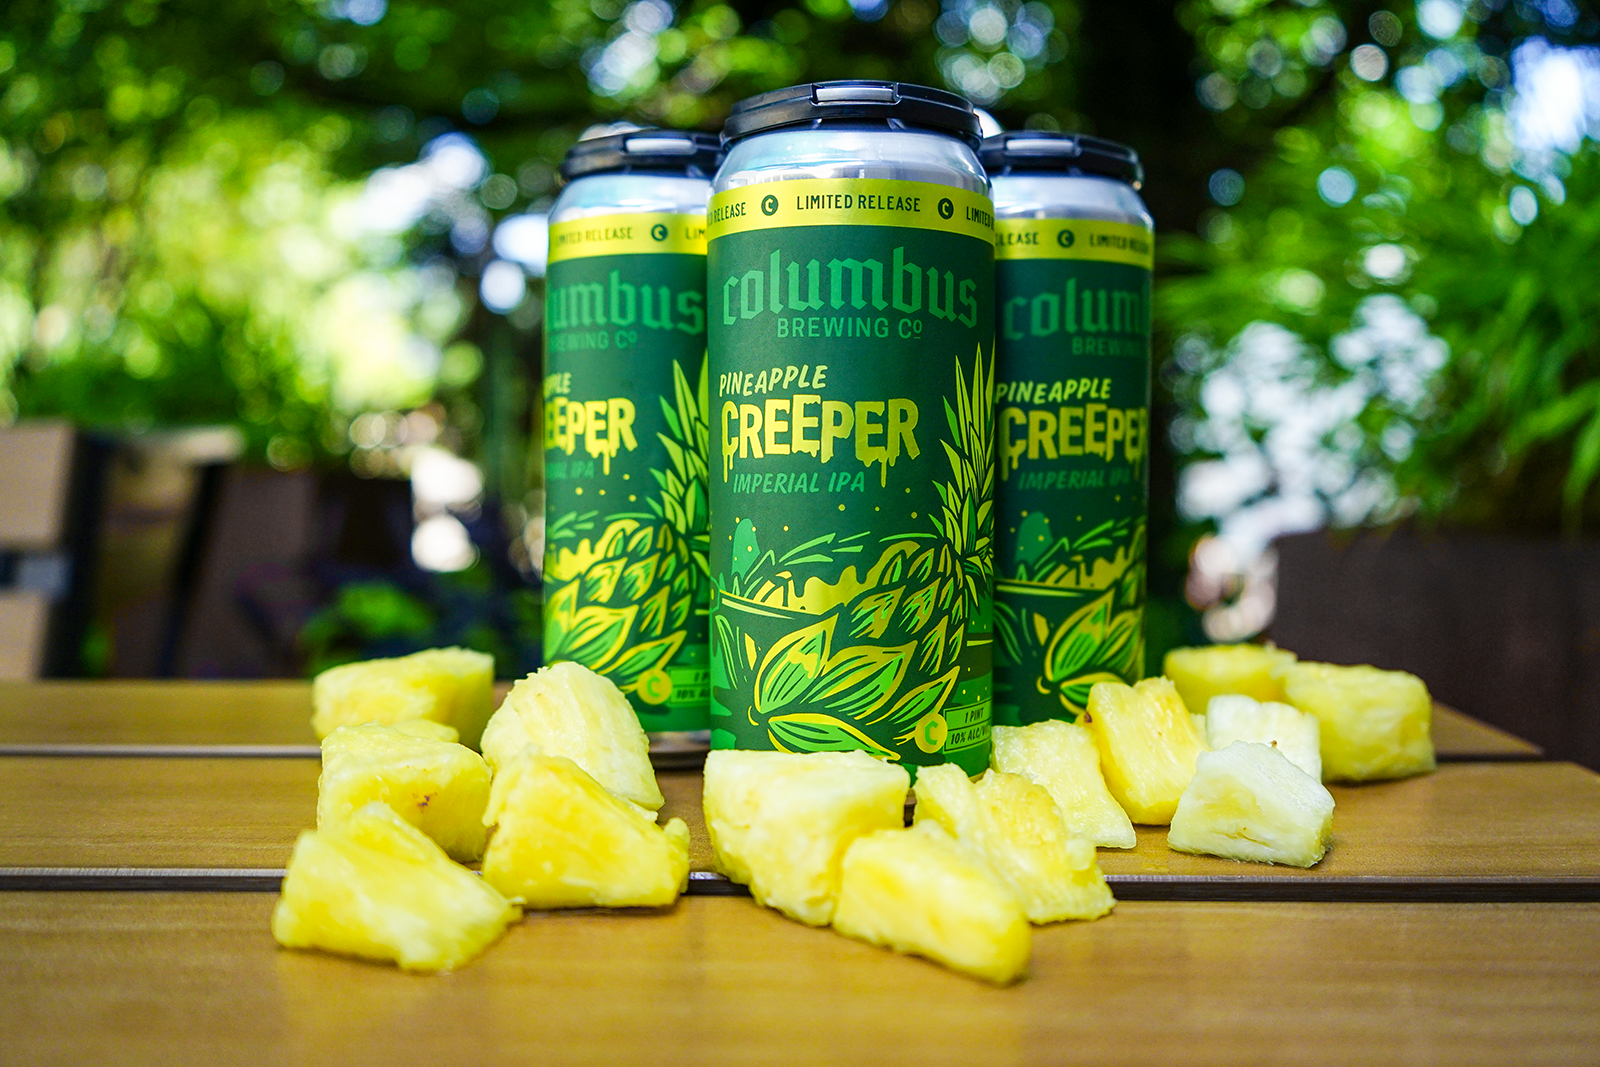 Creeper - Columbus Brewing Company